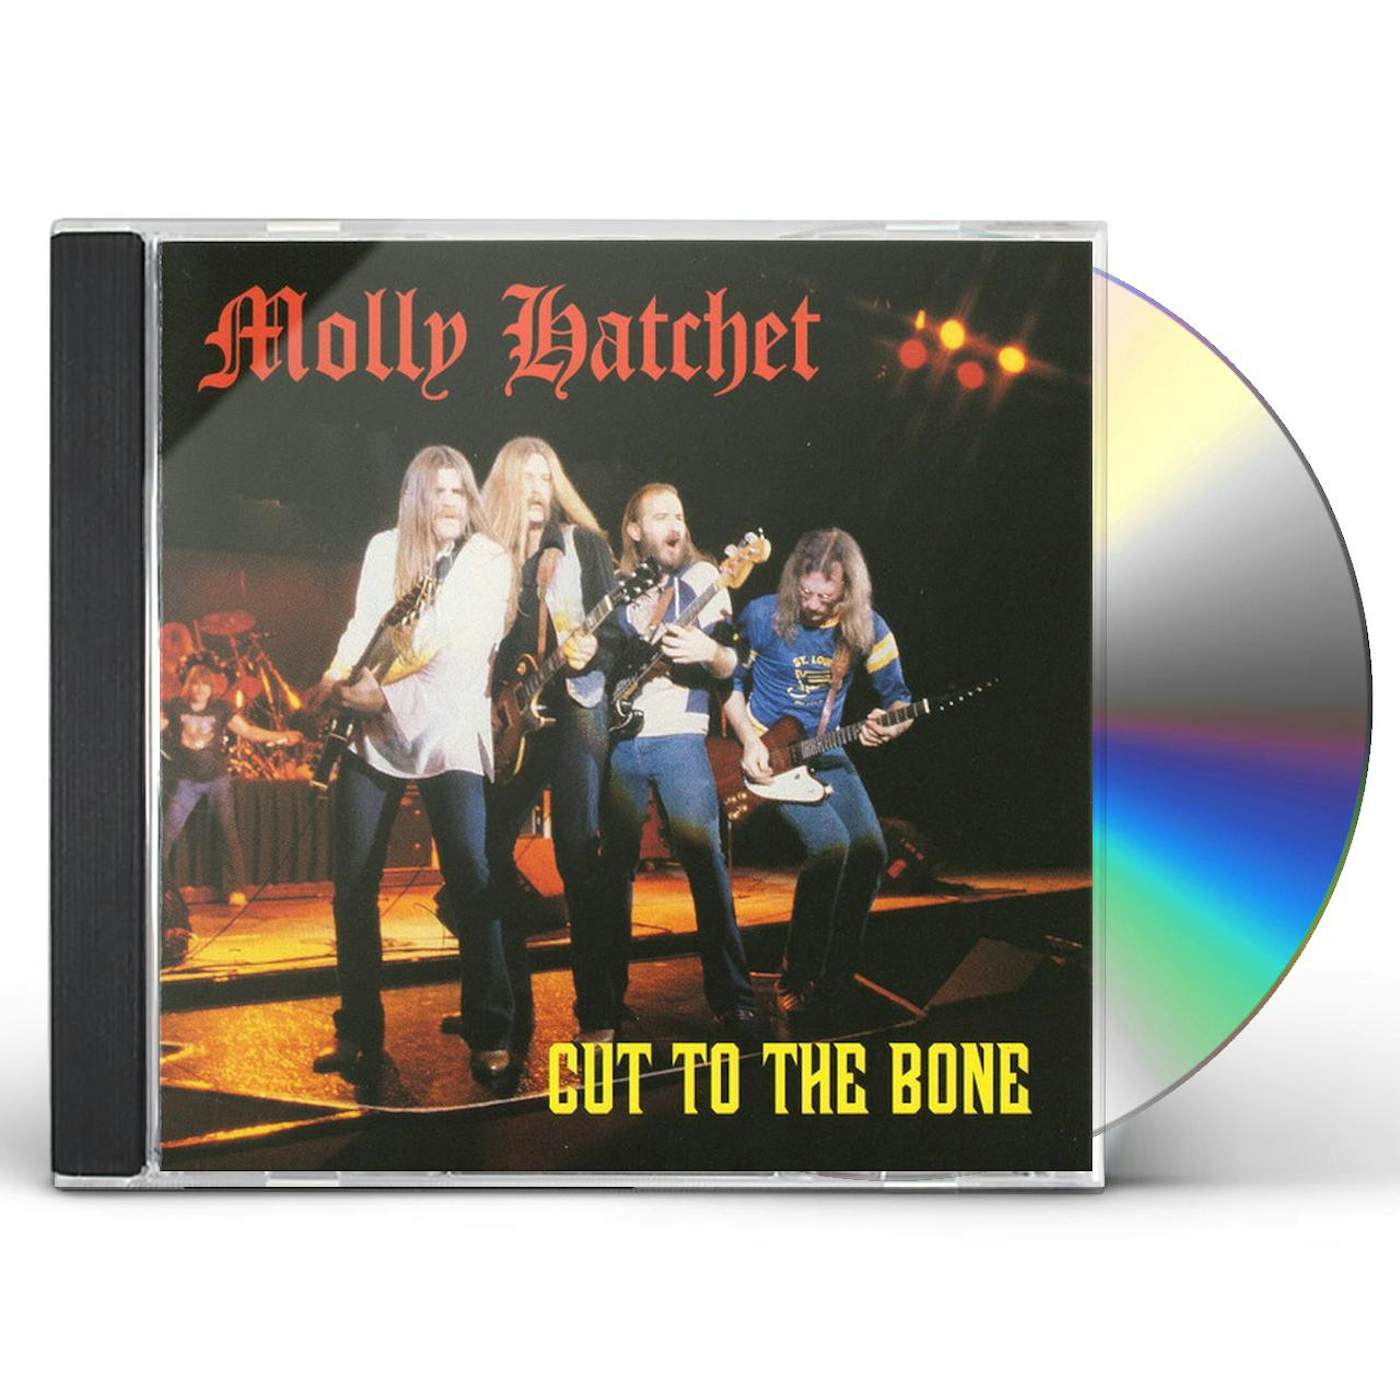 Molly Hatchet CUT TO THE BONE (HITS) CD